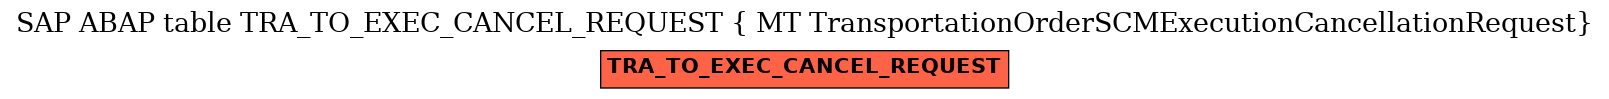 E-R Diagram for table TRA_TO_EXEC_CANCEL_REQUEST ( MT TransportationOrderSCMExecutionCancellationRequest)